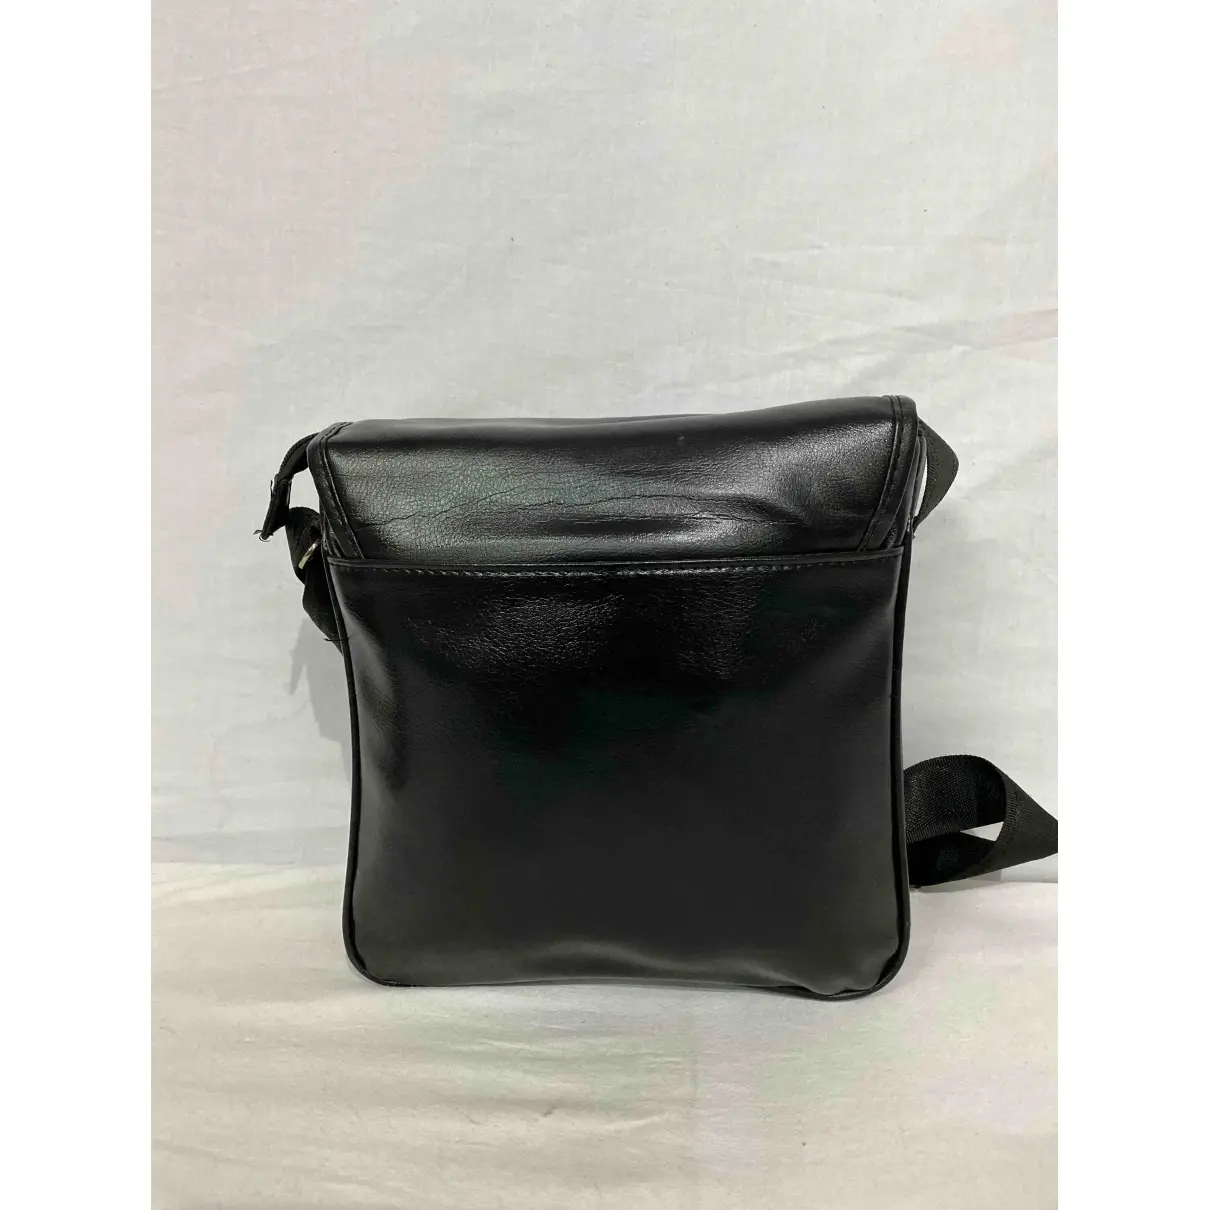 Buy Giorgio Armani Patent leather bag online